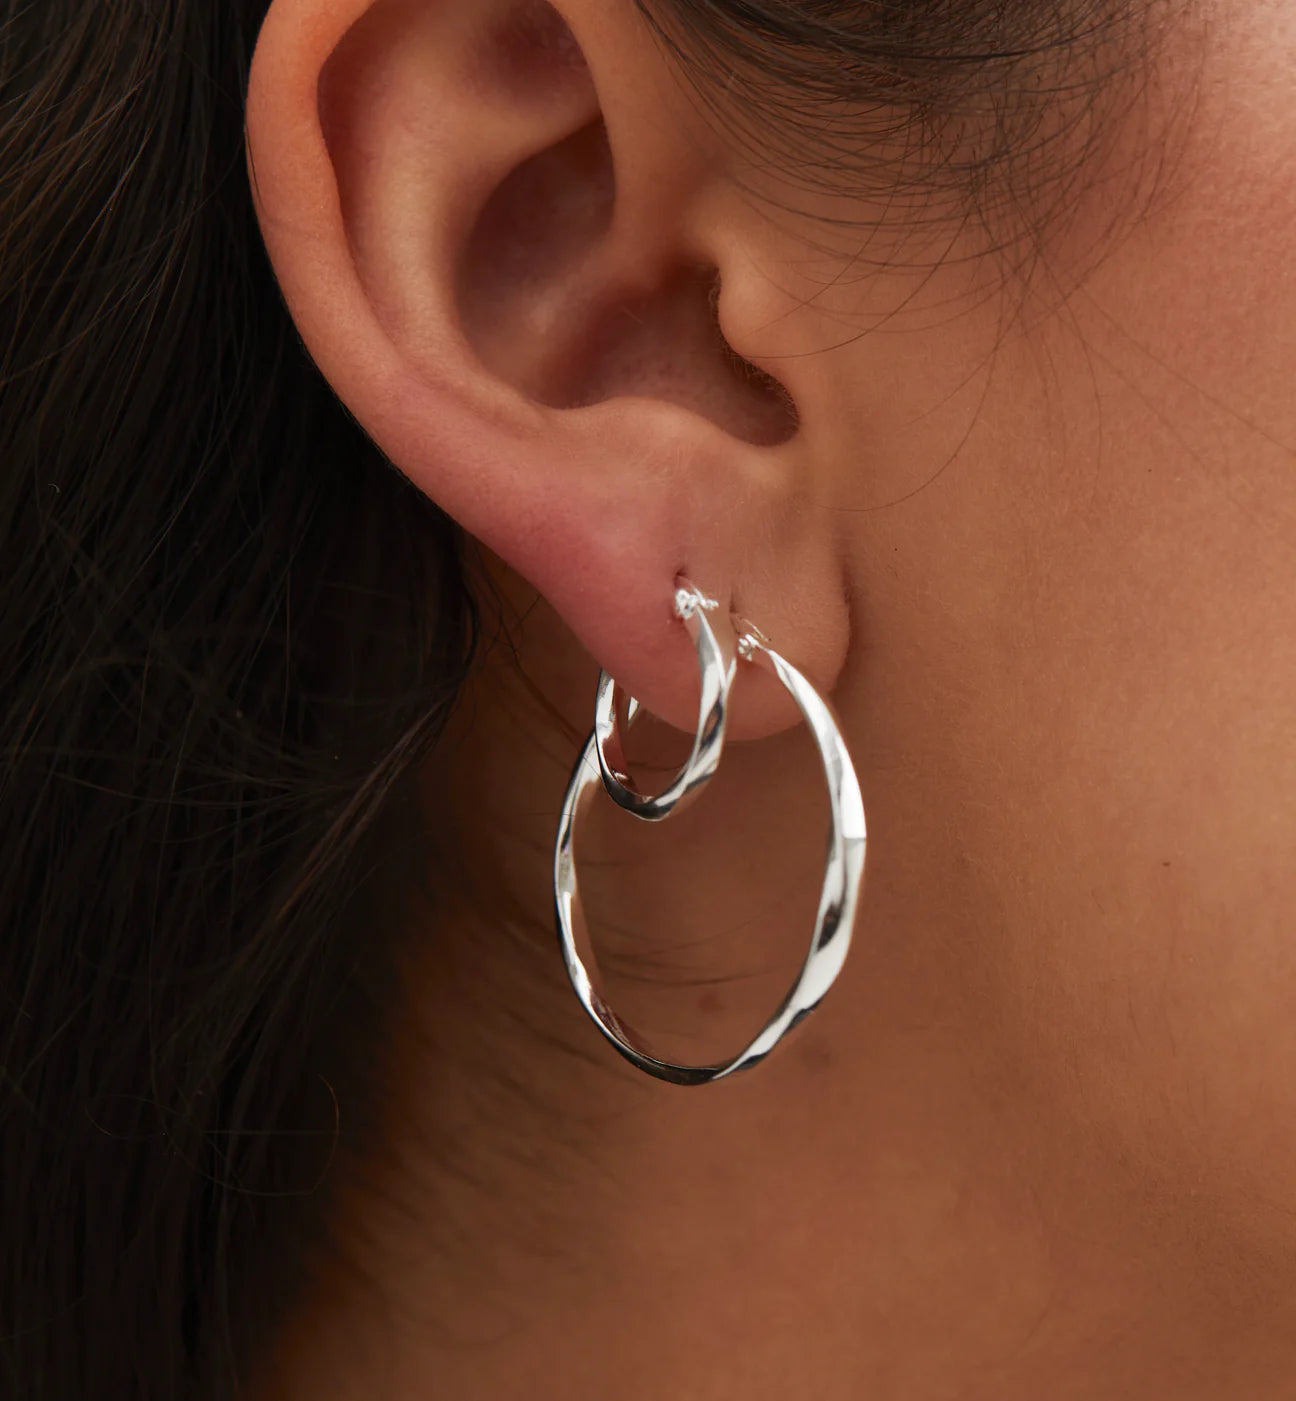 model wearing silver hoop earrings